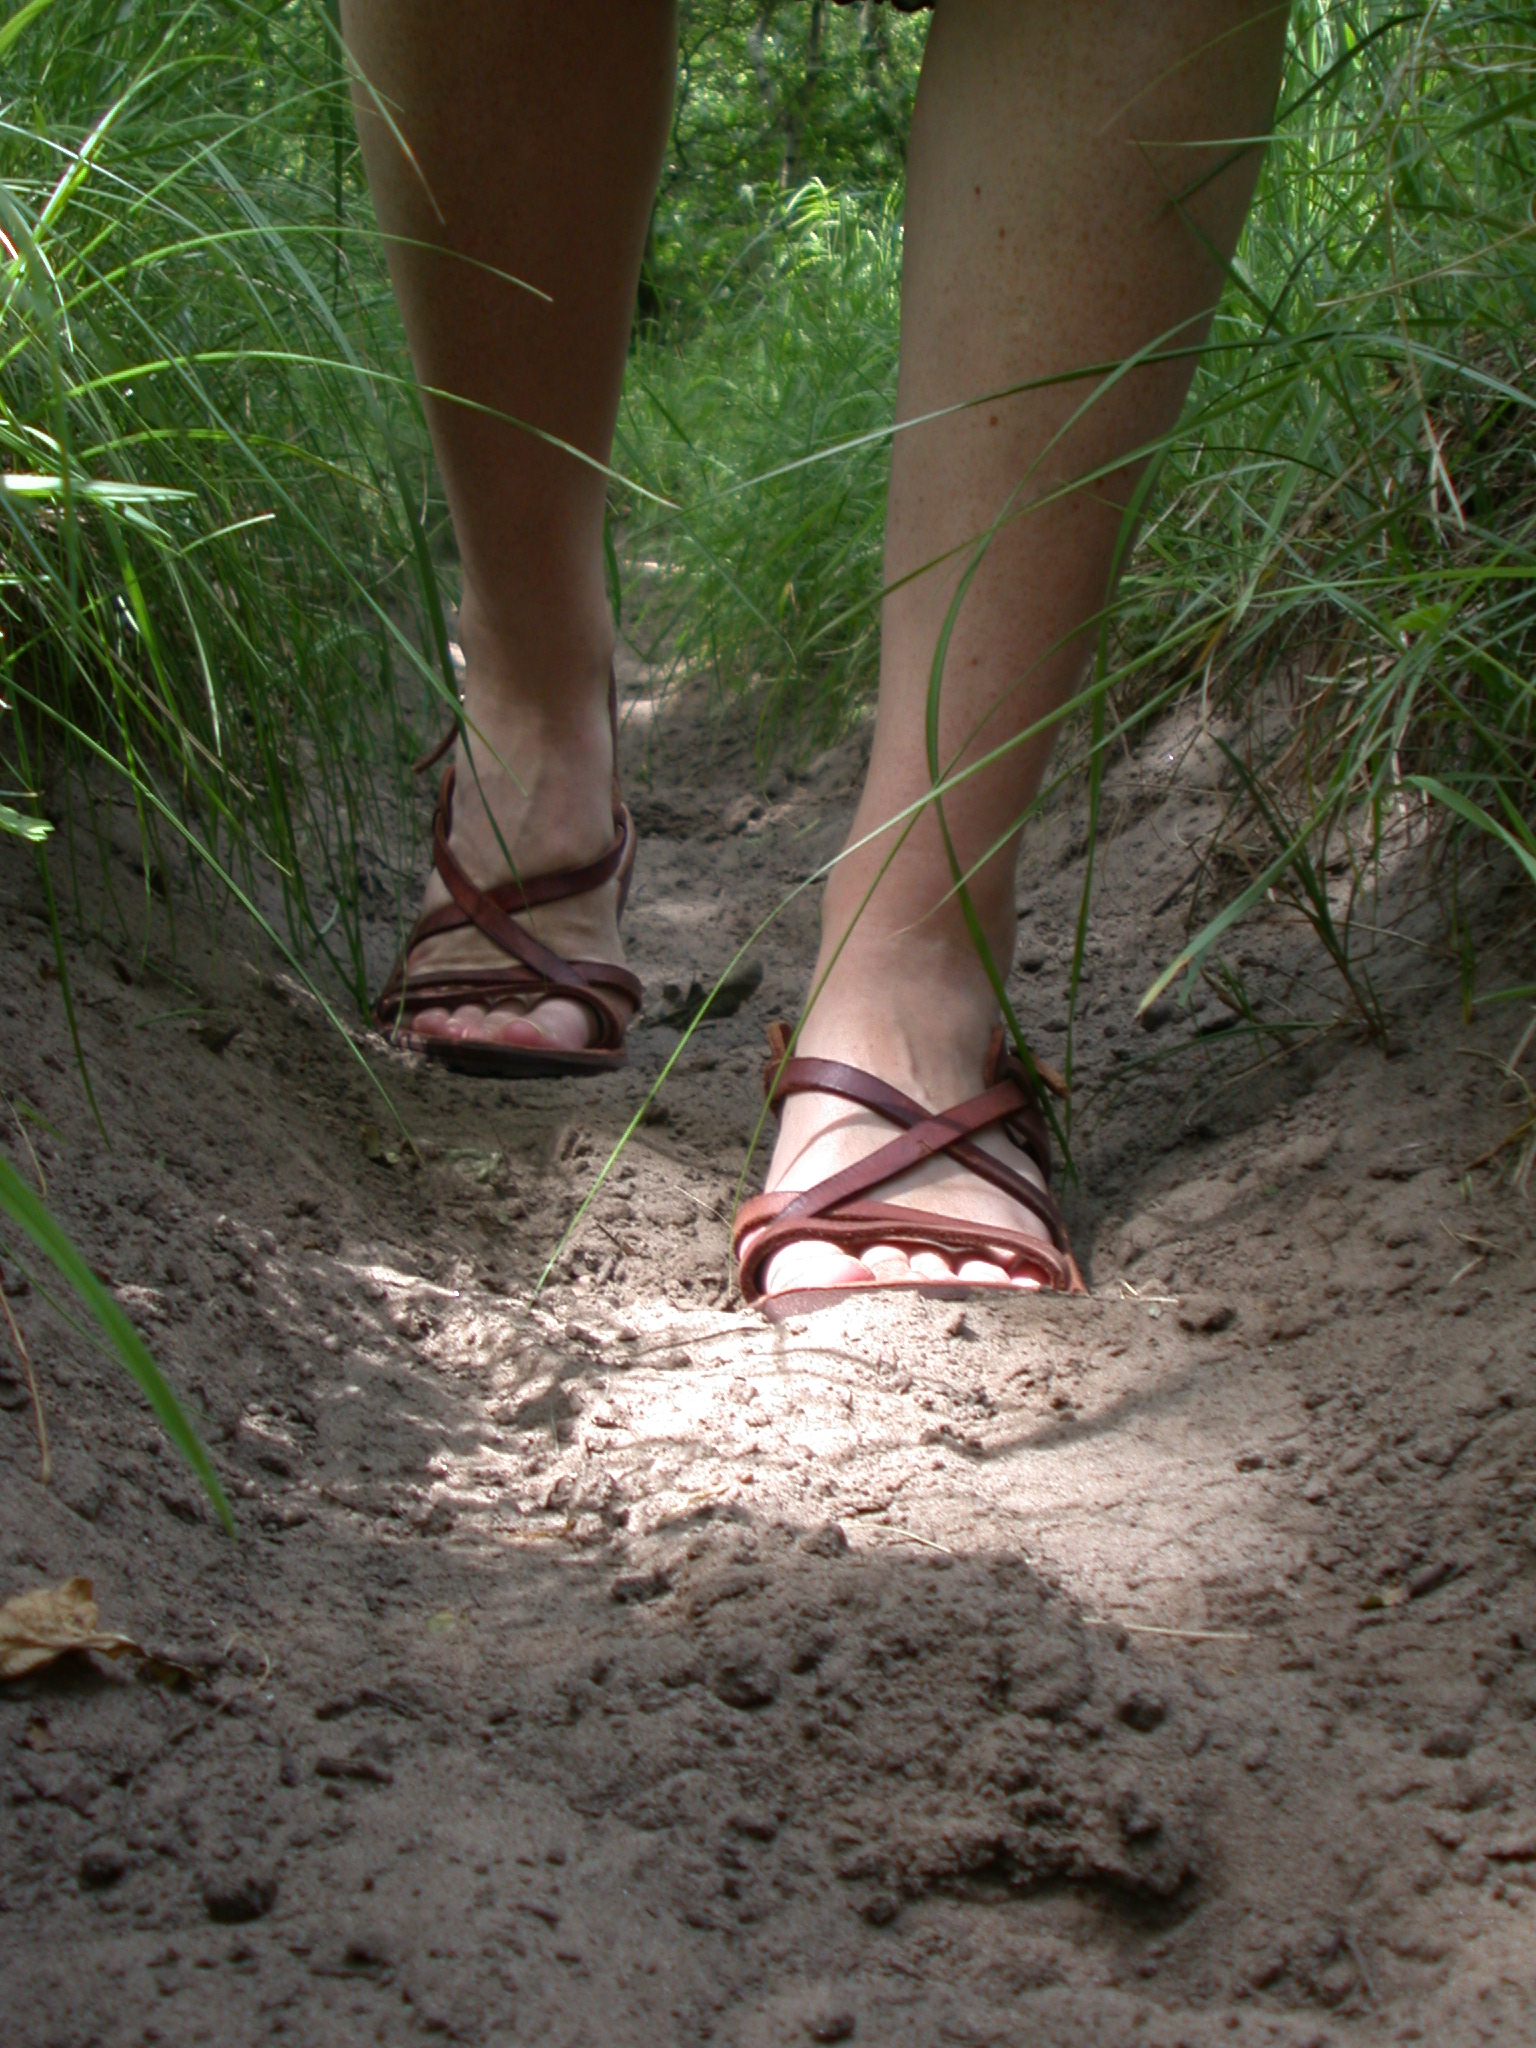 walking foot feet shoe shoes laces path walk grass nature characters humanparts leg legs woman janneke